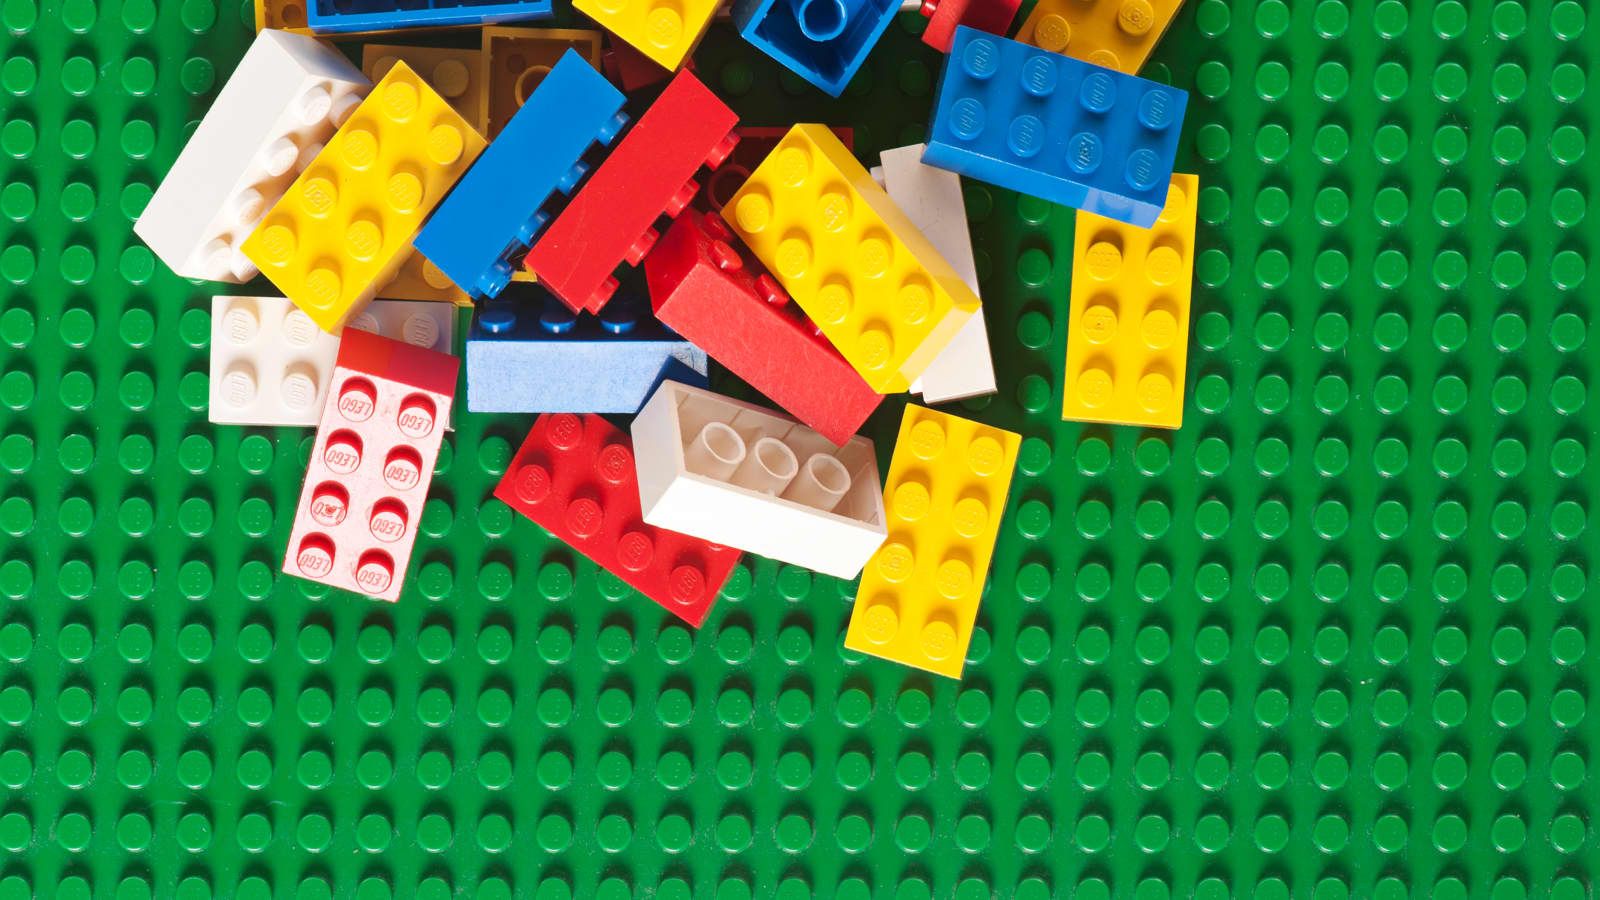 Lego plans to scrap plastic bags and make more 'bio bricks'